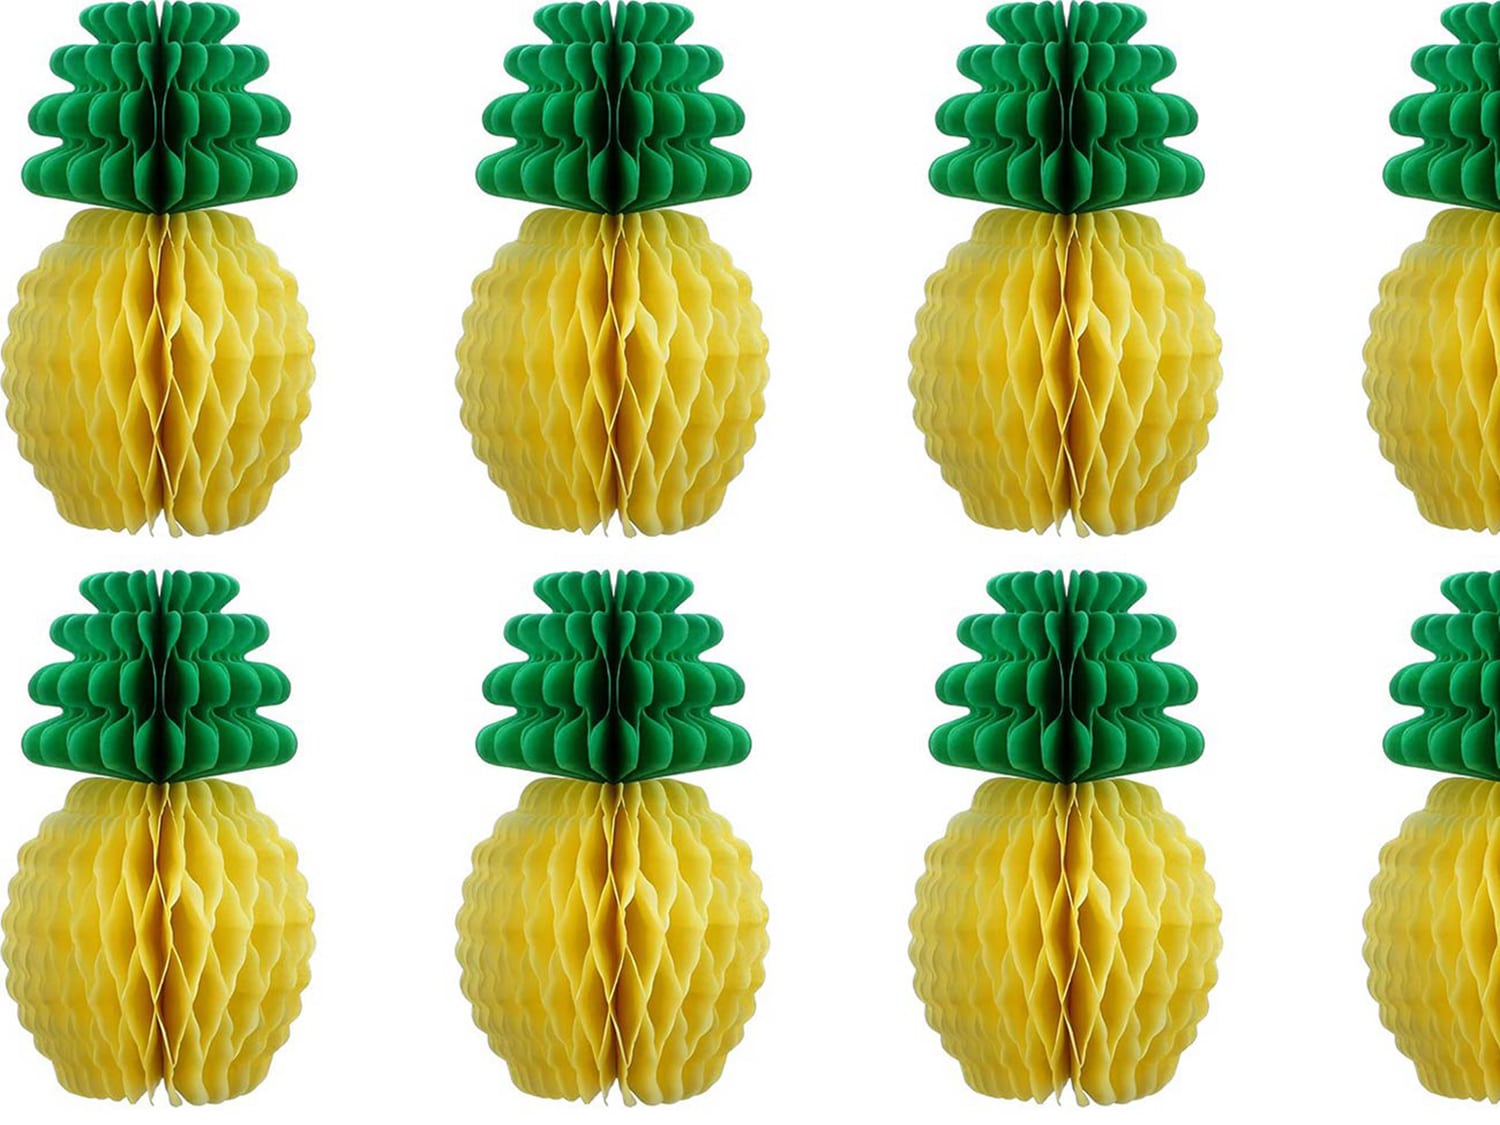 Pineapple paper centerpiece